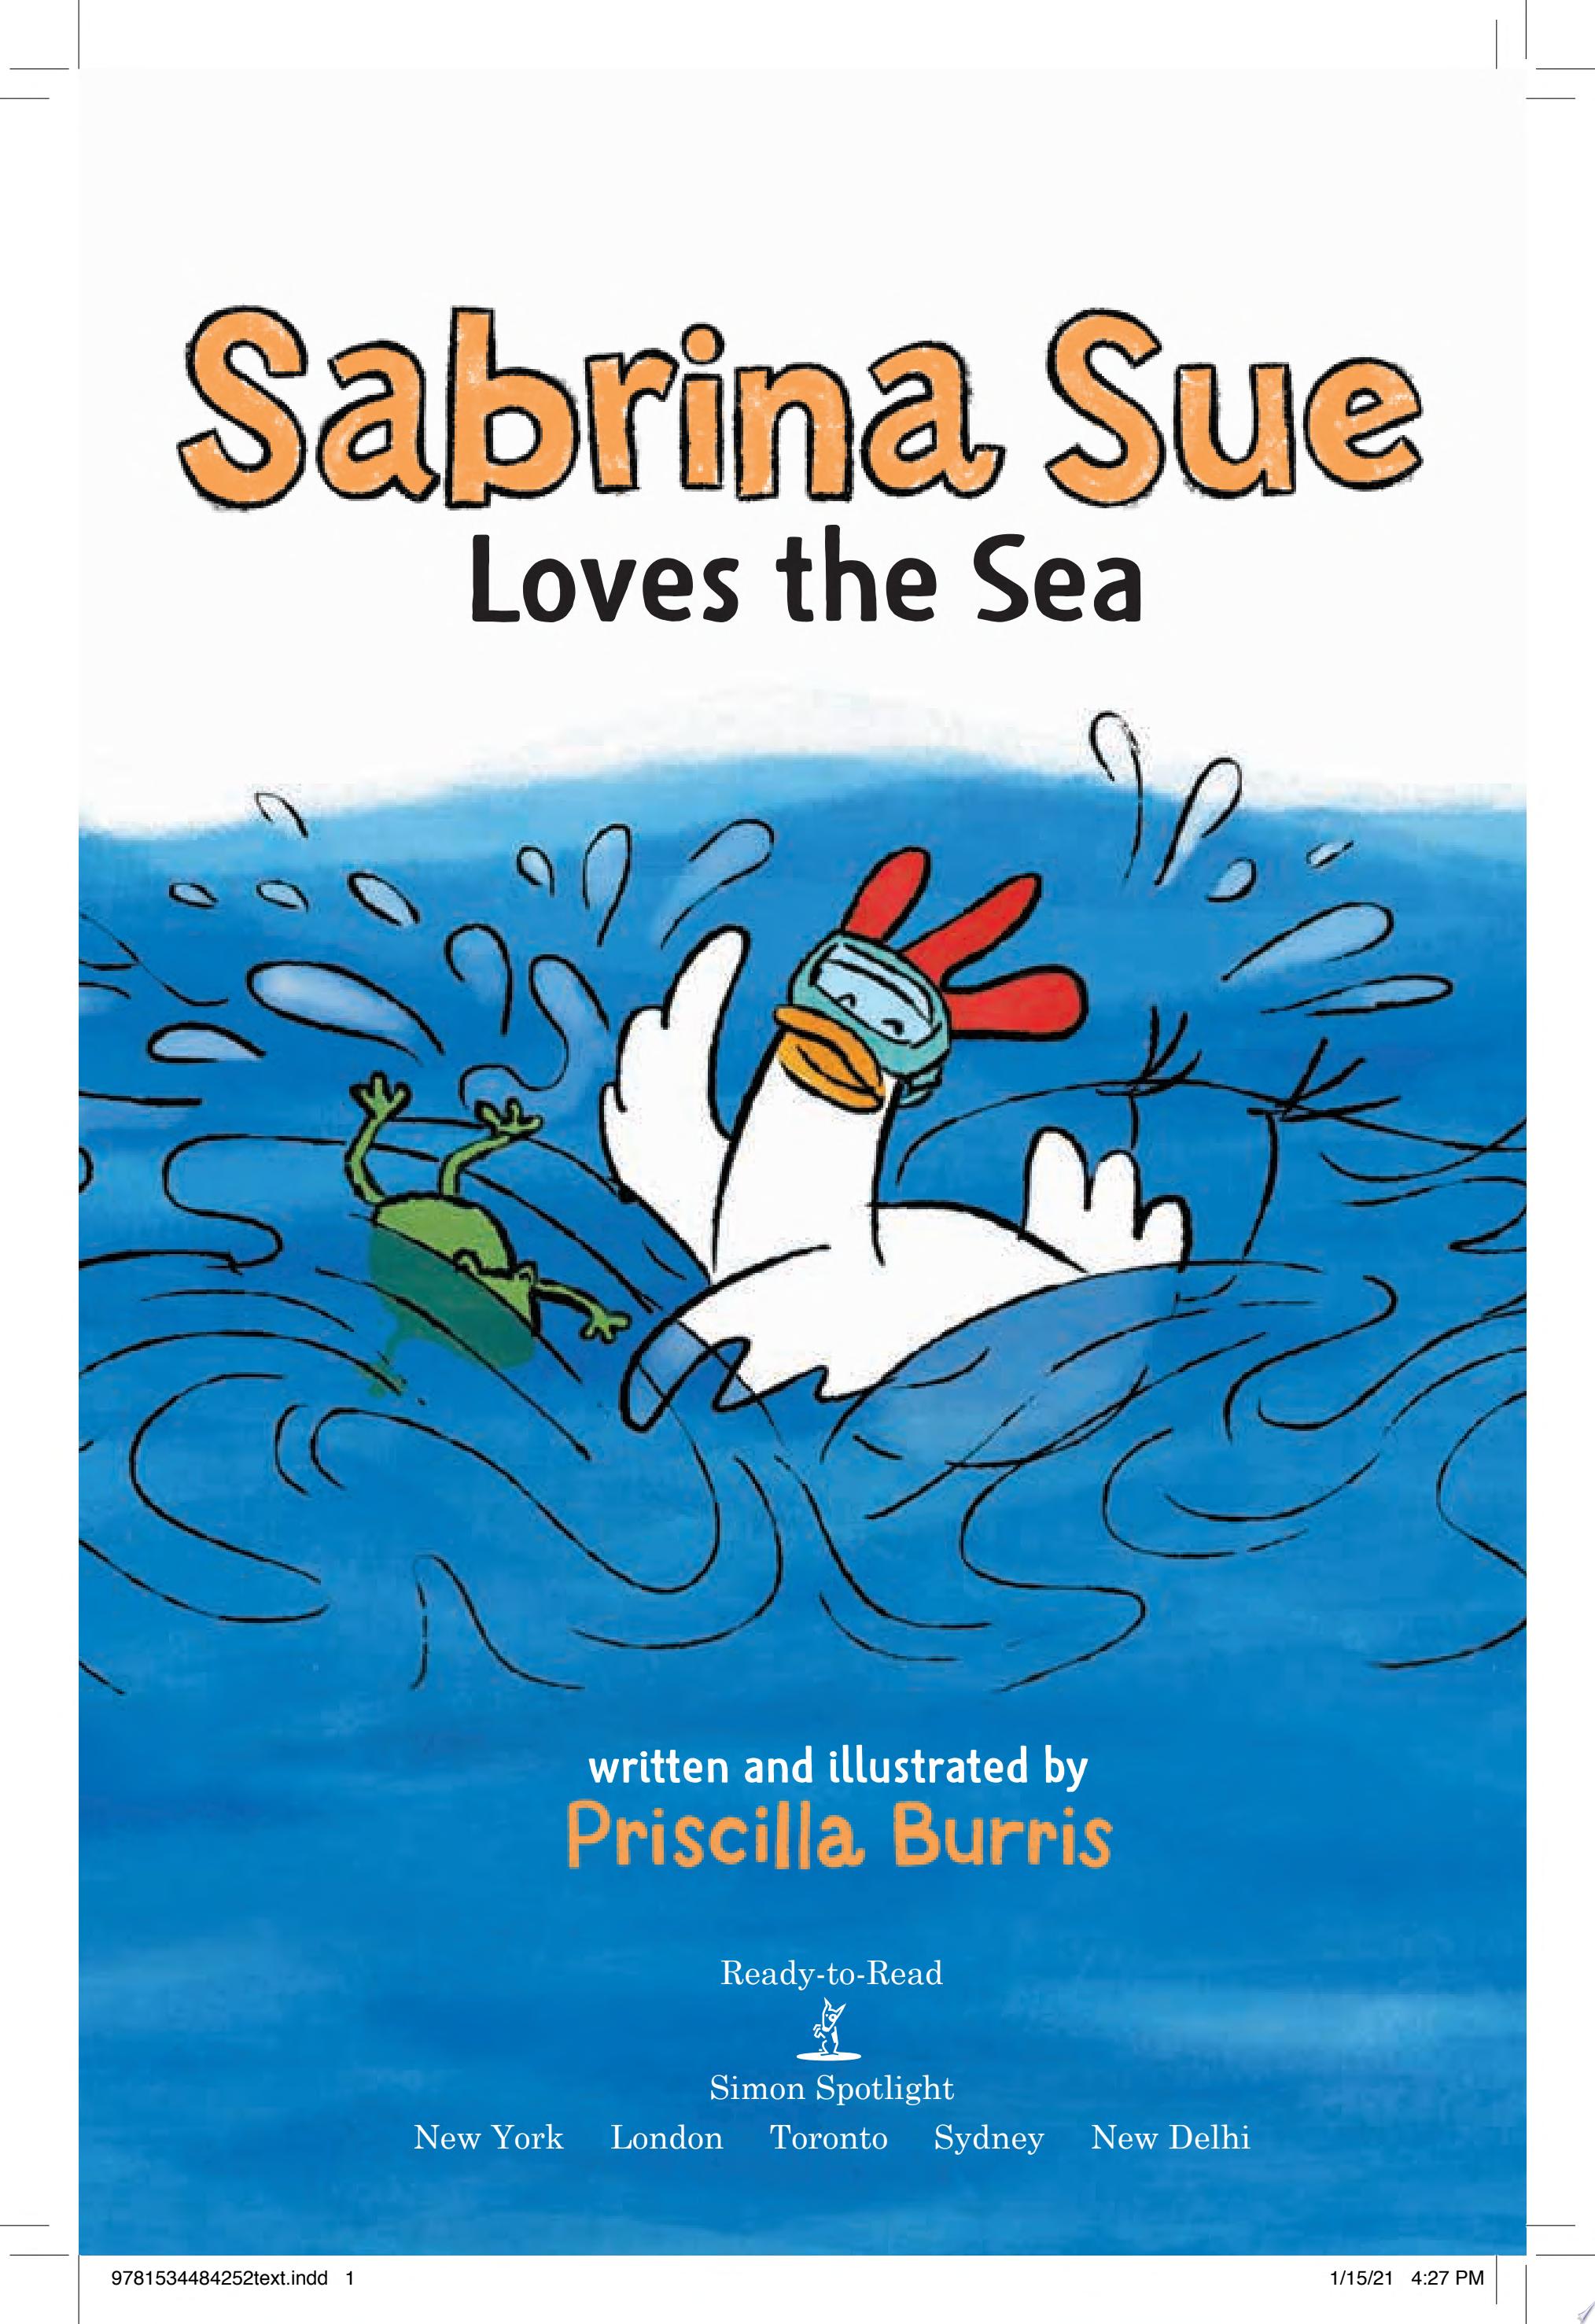 Image for "Sabrina Sue Loves the Sea"